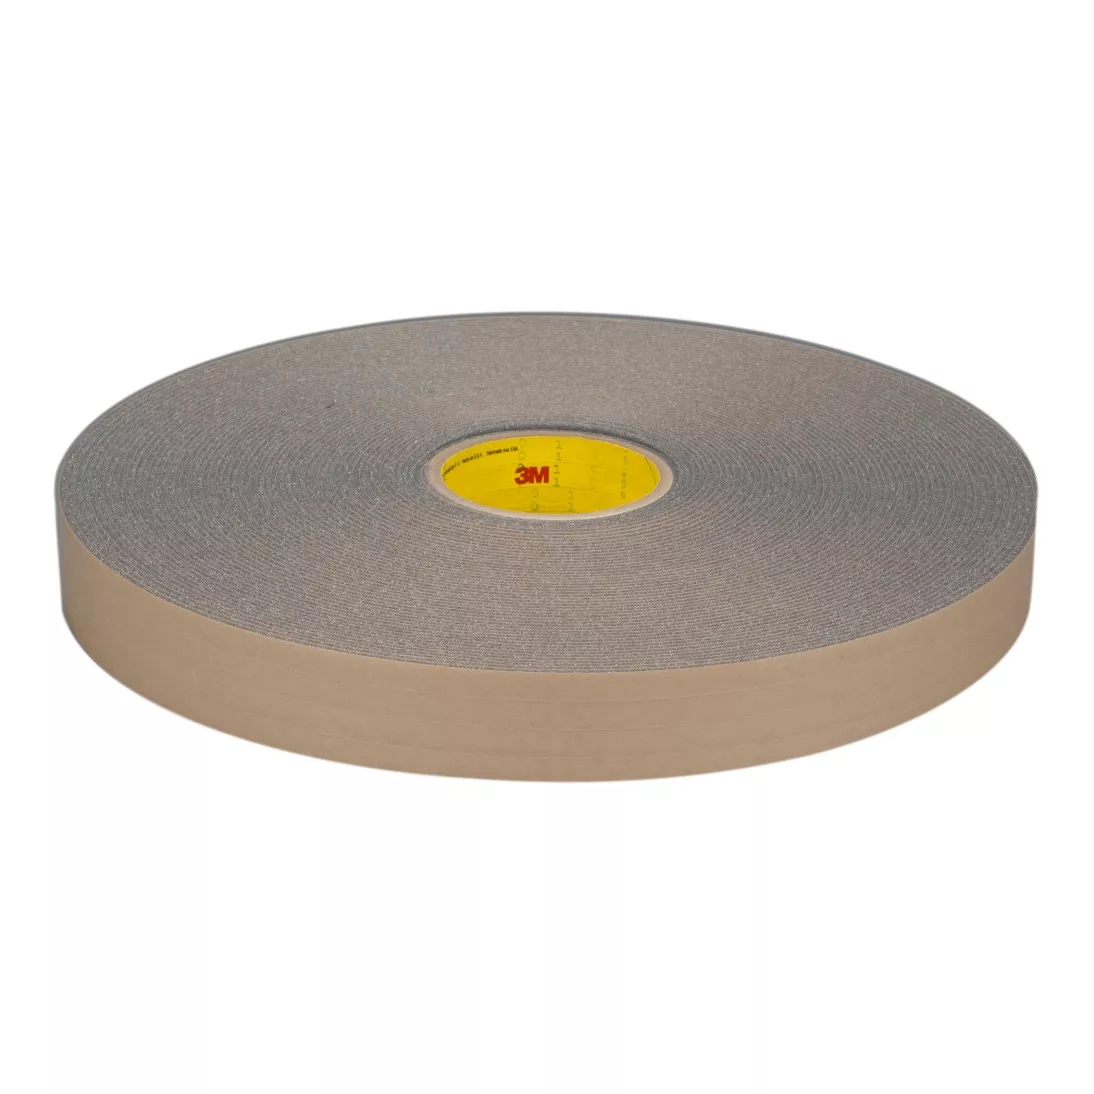 3M™ Urethane Foam Tape 4318, Charcoal Gray, 3/8 in x 36 yd, 125 mil, 24
rolls per case